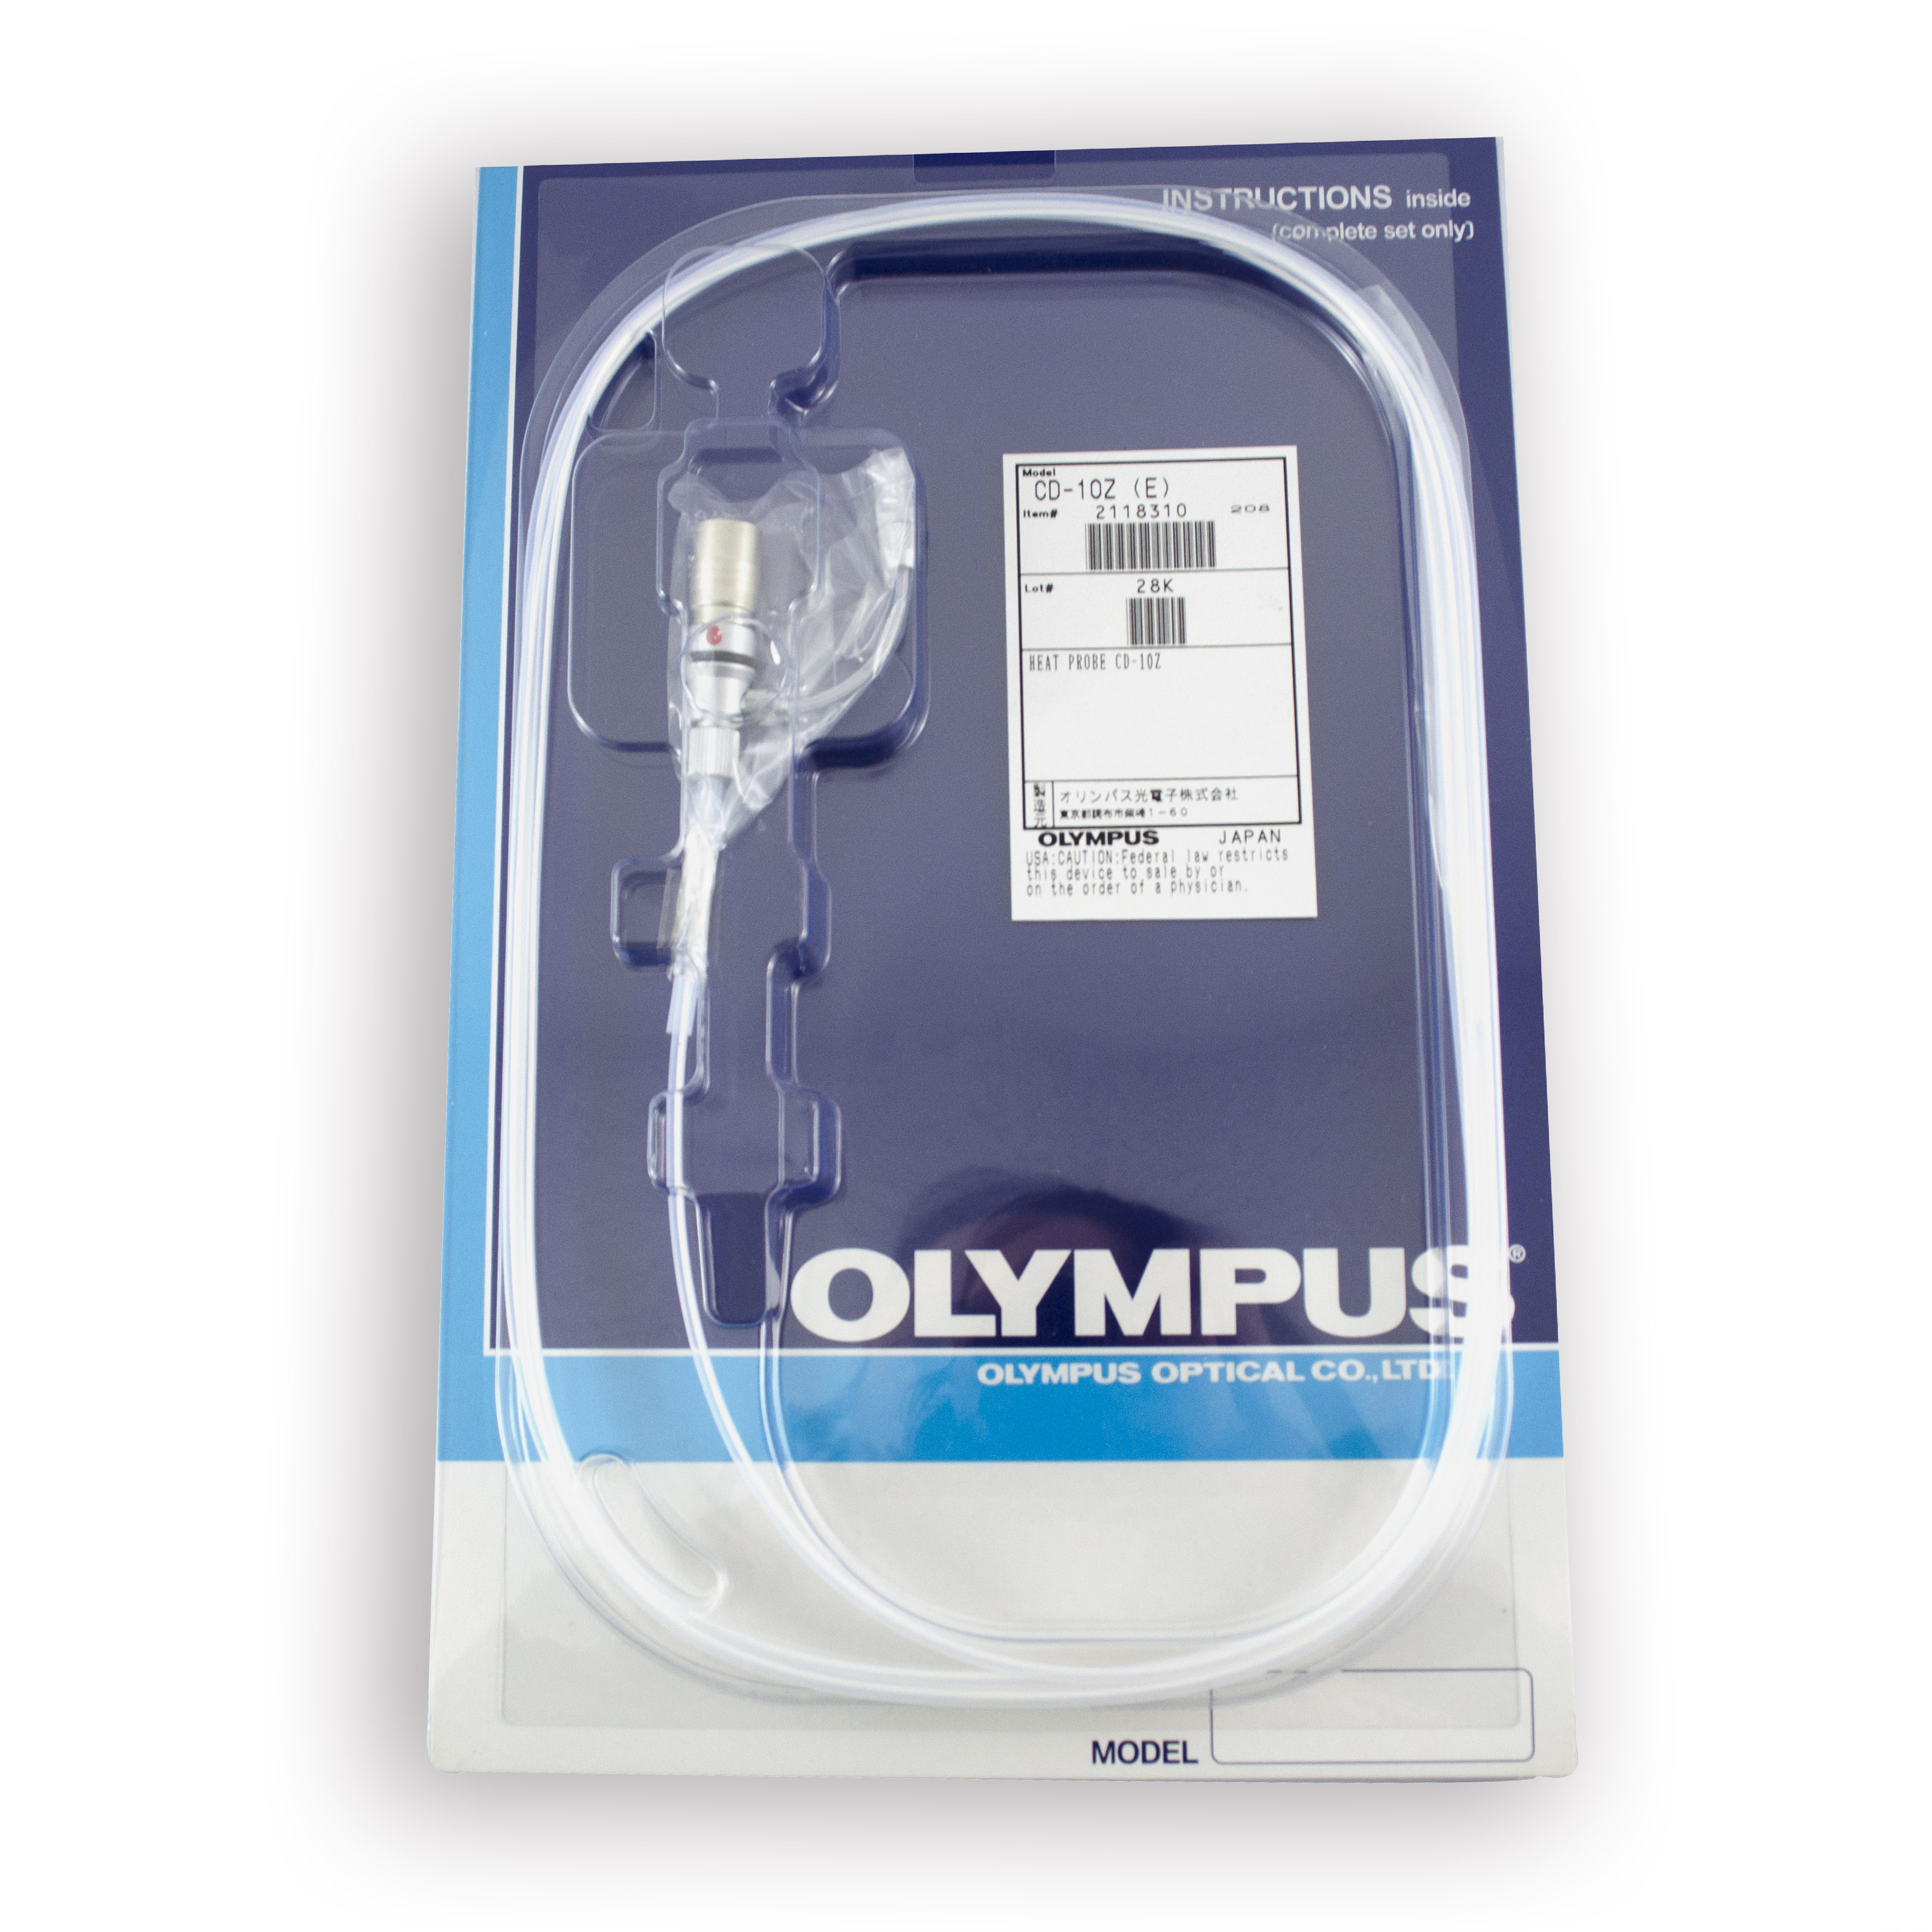 Olympus Reusable Coagulation Electrode (Heat Probe) - CD-10Z (Original Packaging)